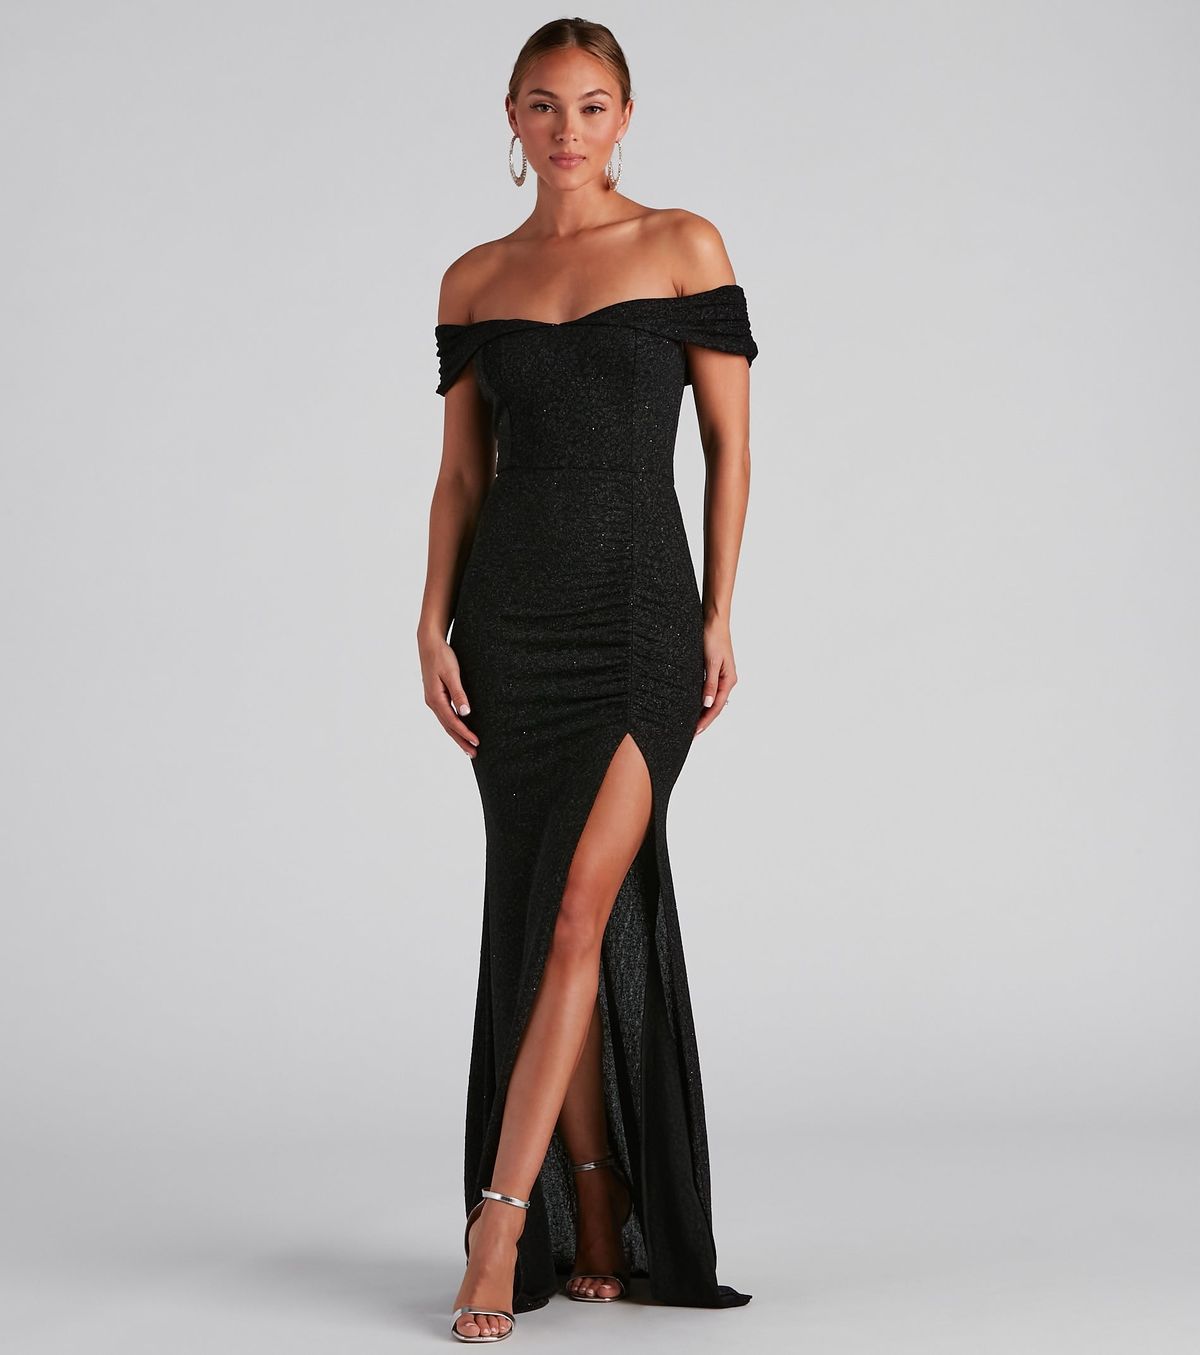 Long One Shoulder Formal Metallic Prom Dress The Dress, 54% OFF